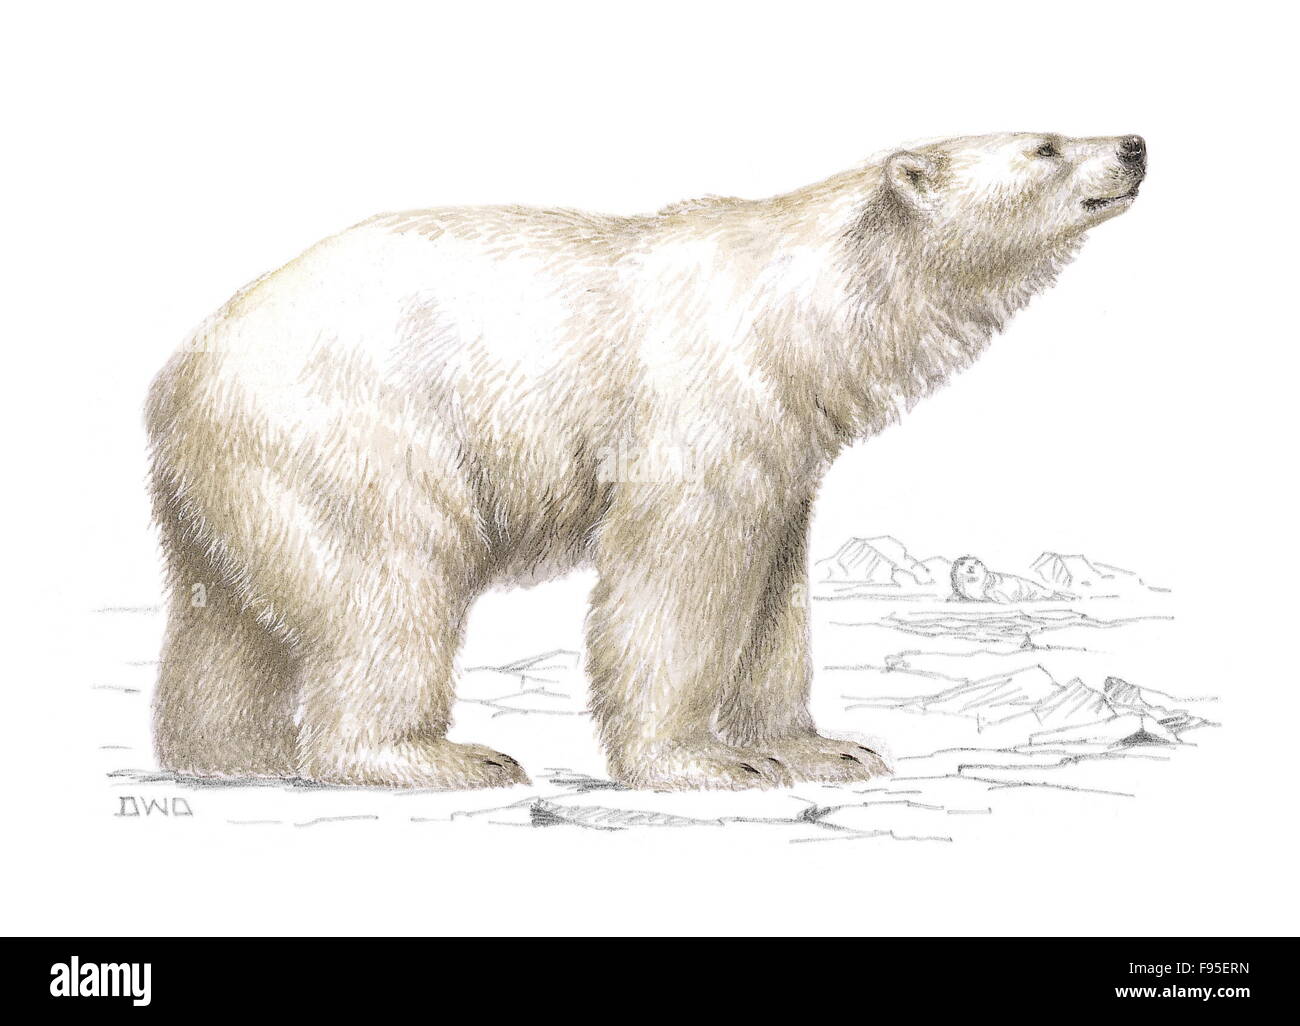 Ilustración del oso polar fotografías e imágenes de alta resolución - Alamy